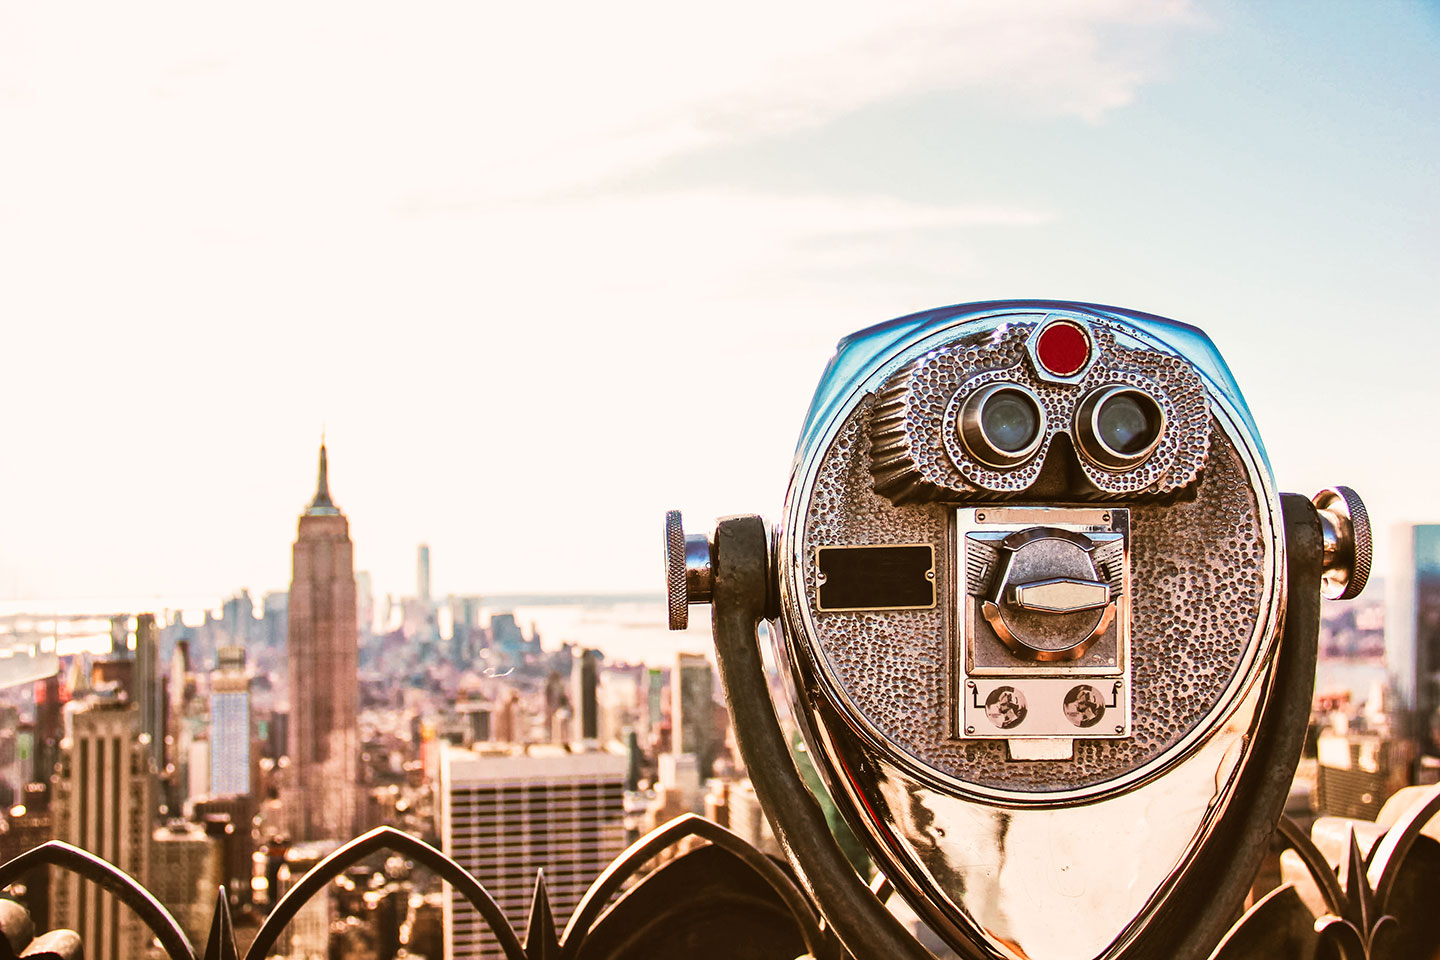 viewfinder magnifier overlooking city